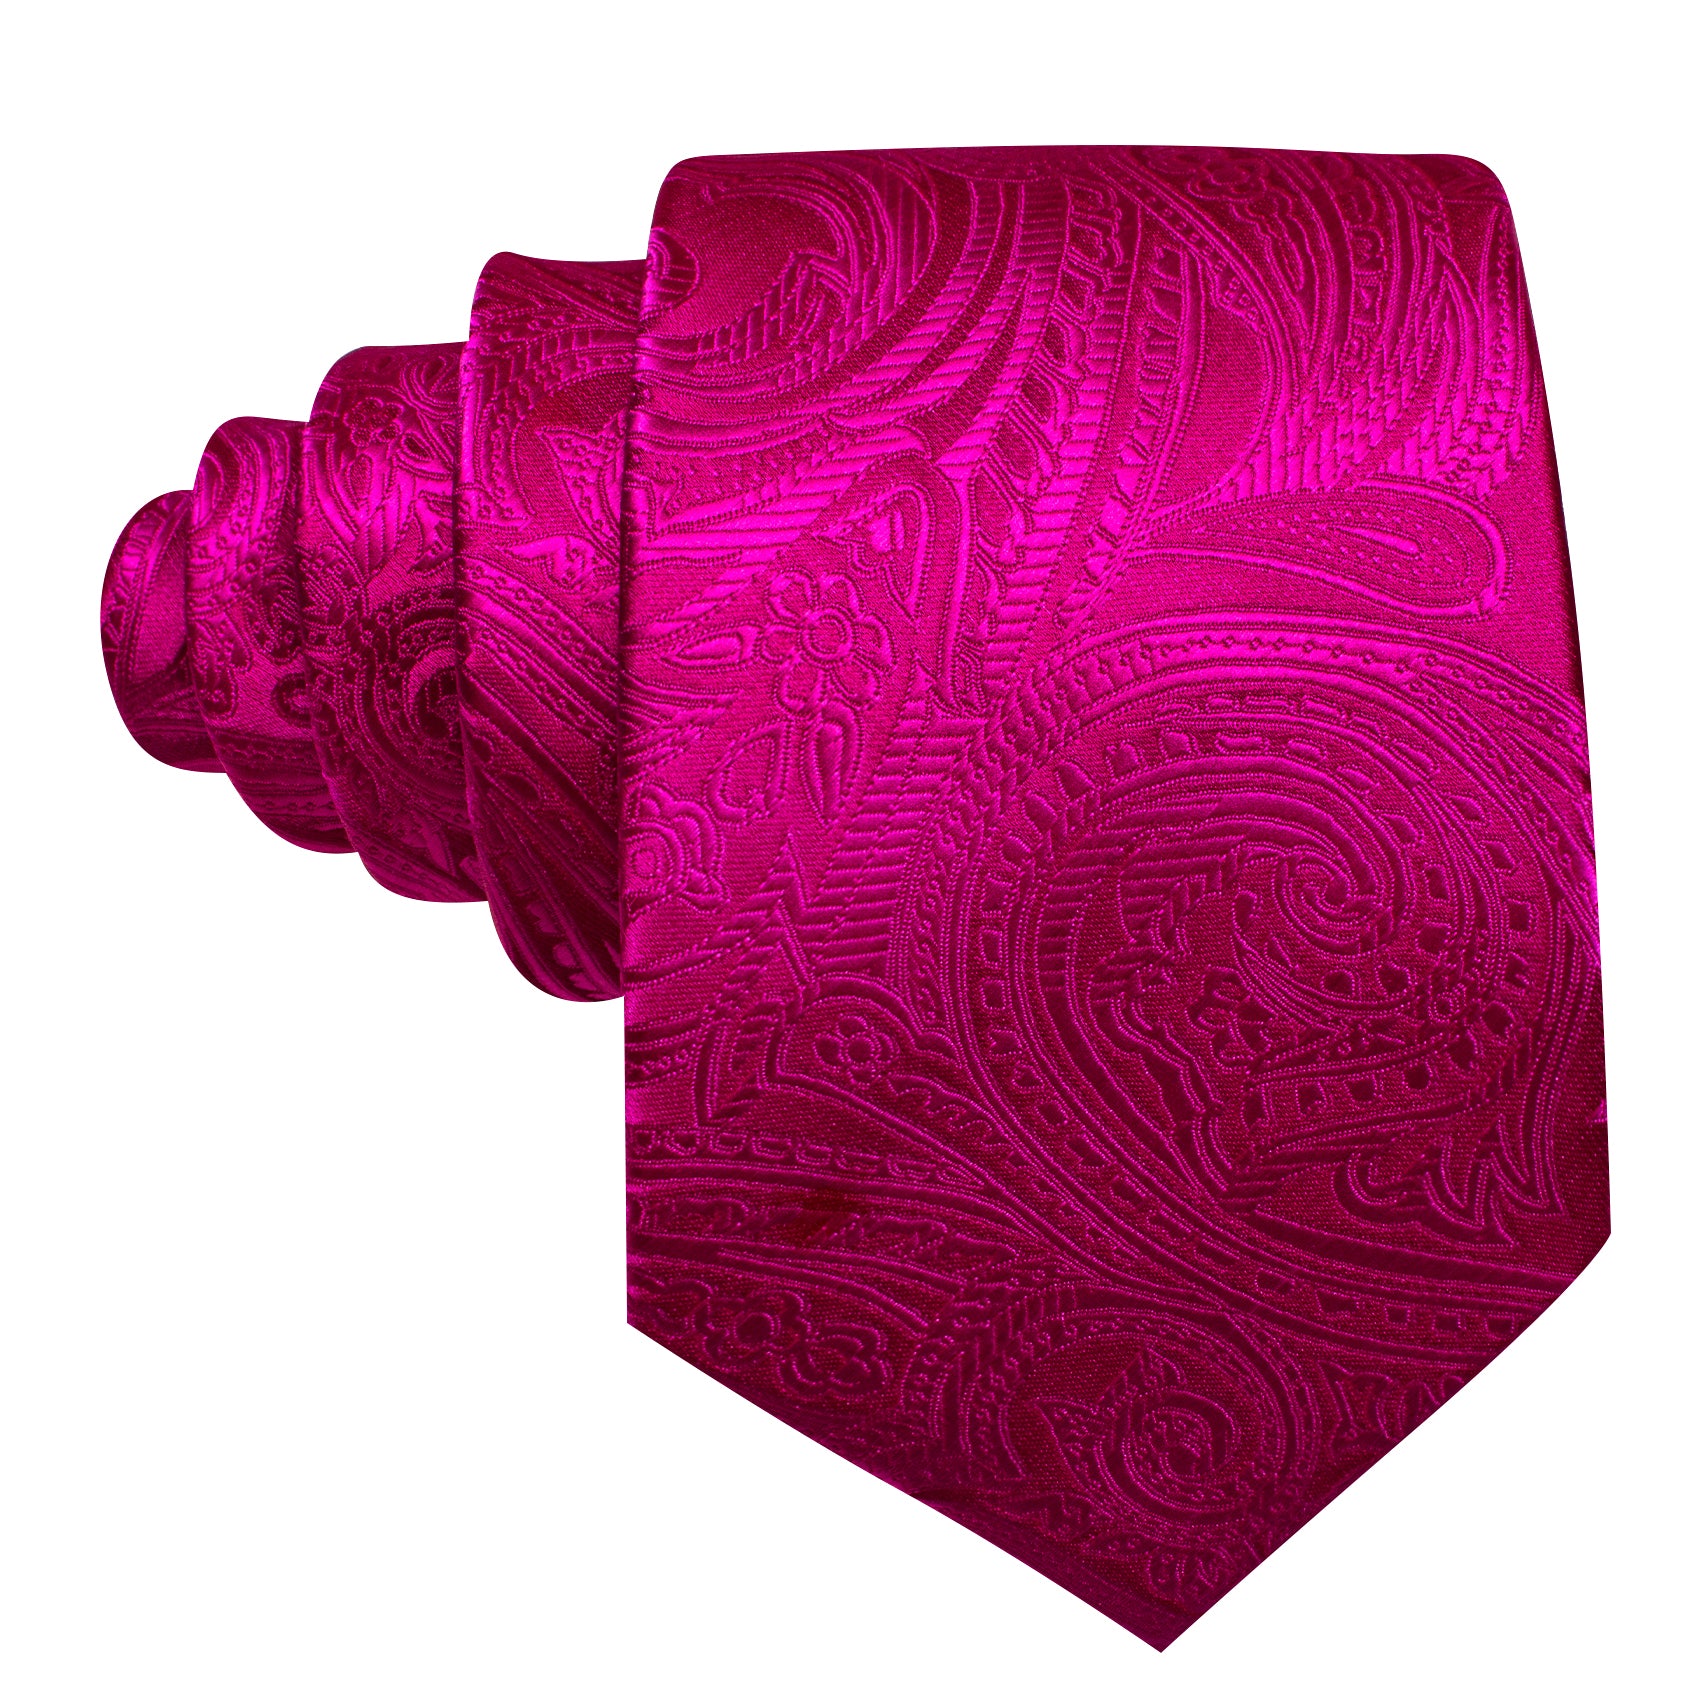 Barry.wang Orchid Tie Paisley Silk Men's Tie Hanky Cufflinks Set